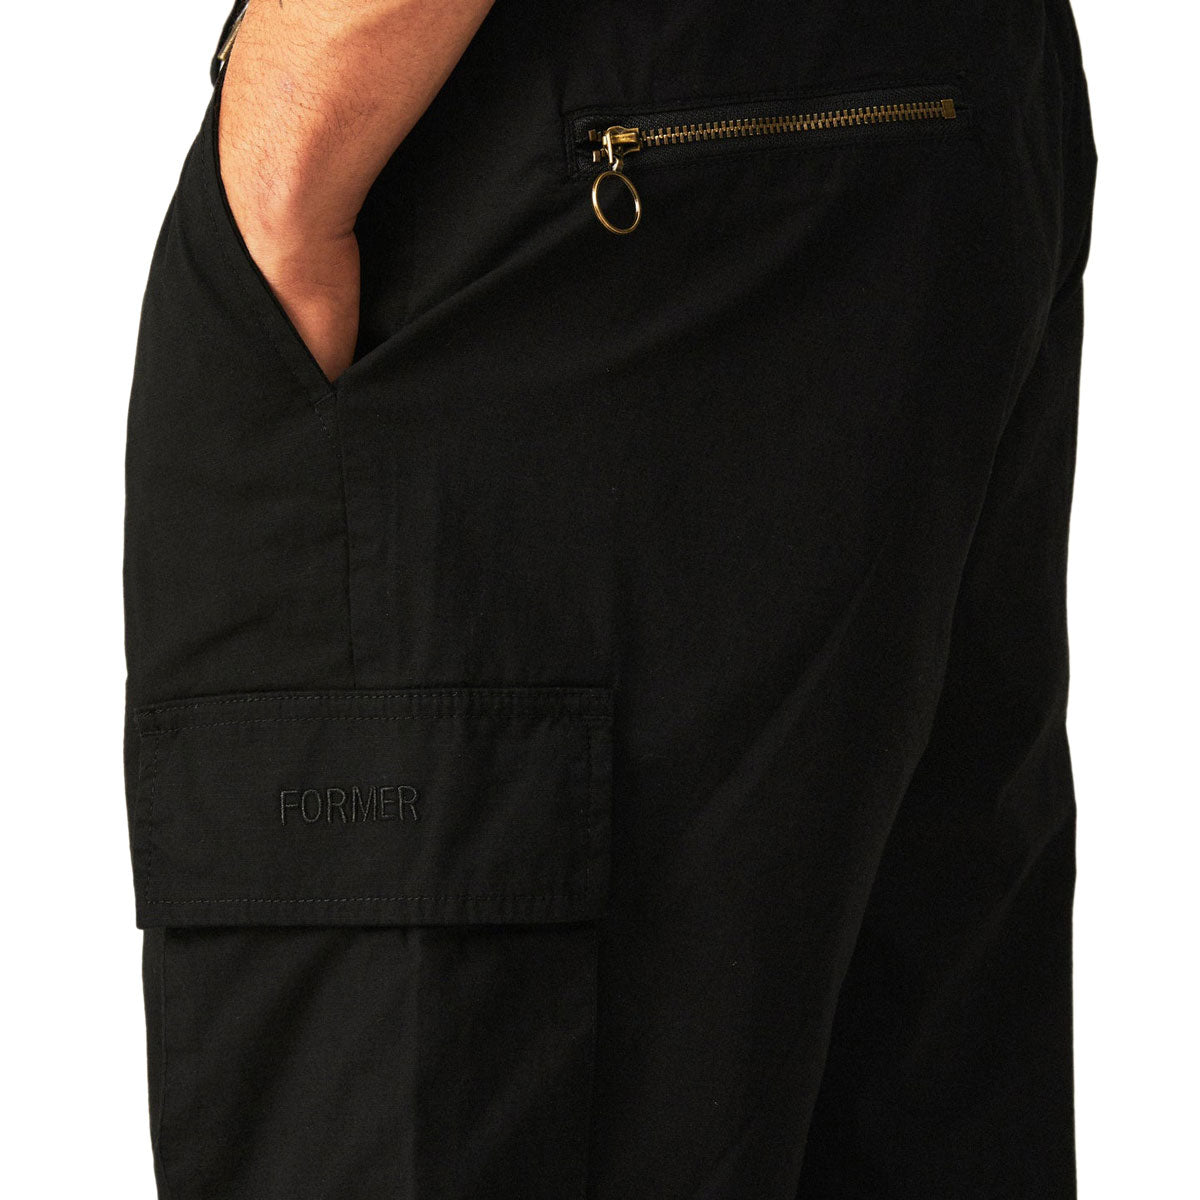 Former Prayer Cargo Pants - Black image 3